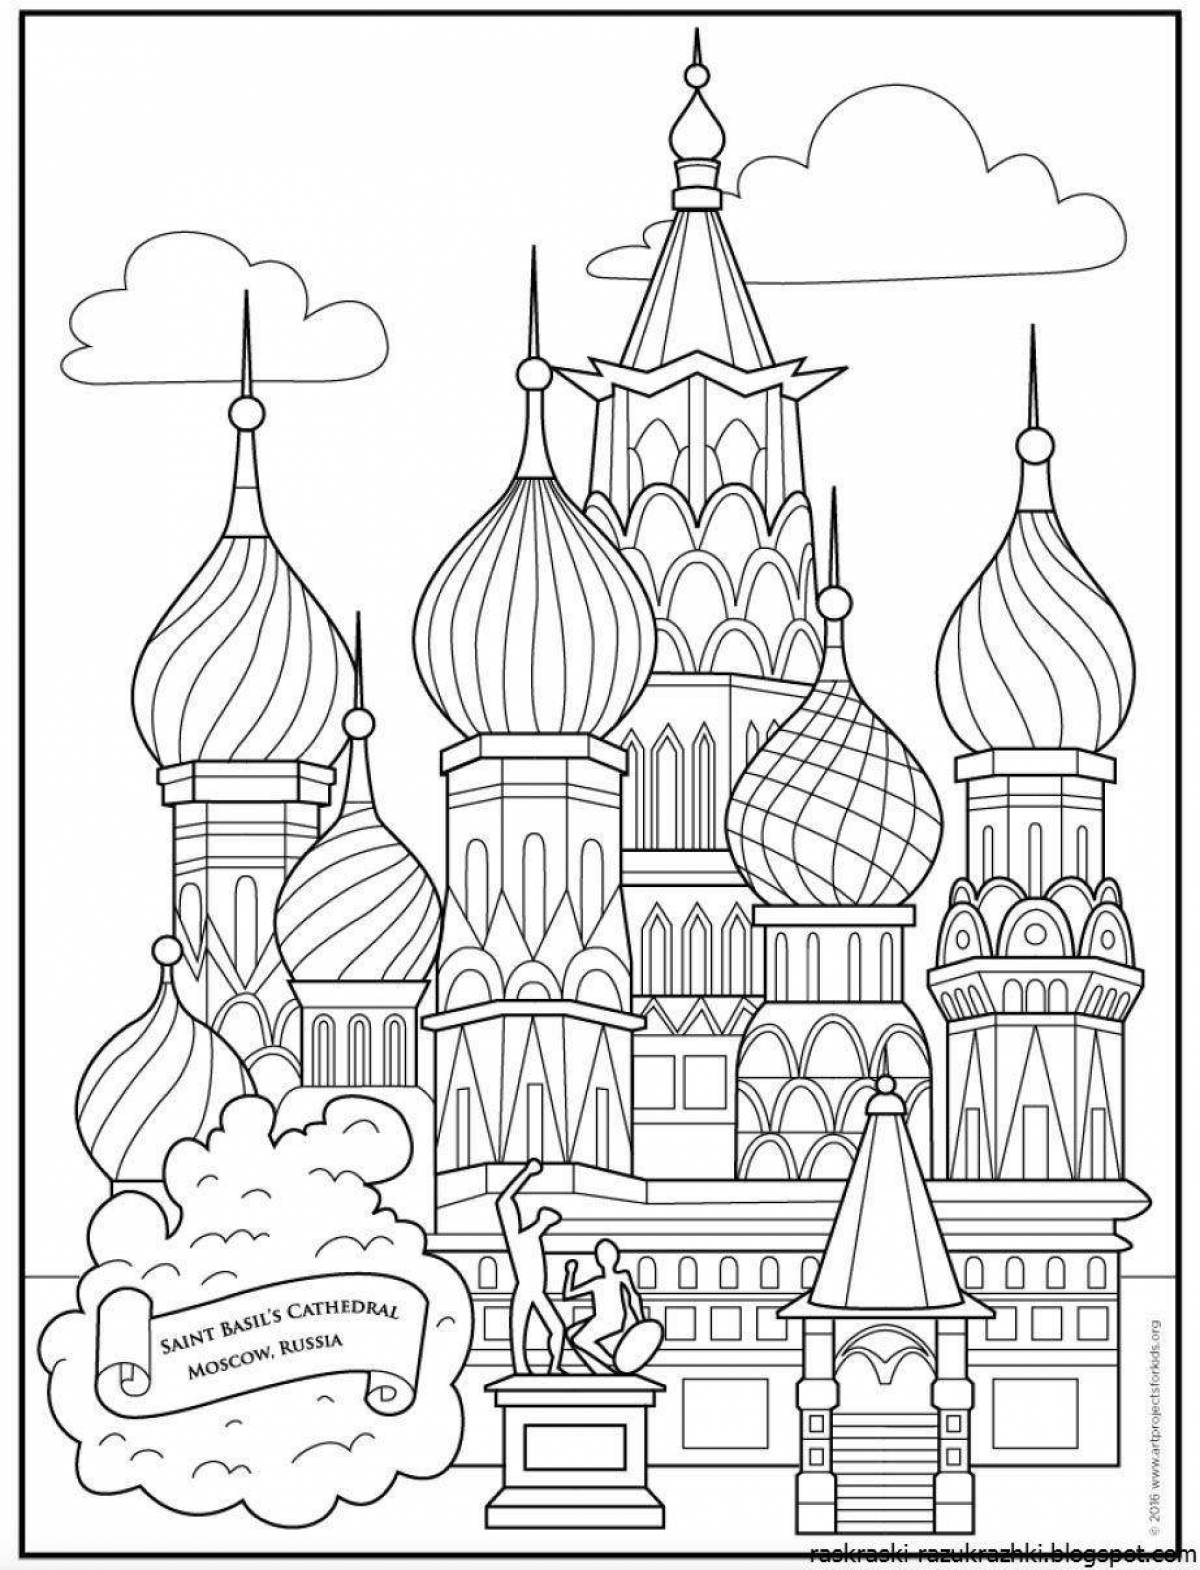 Bright Kremlin coloring book for kids